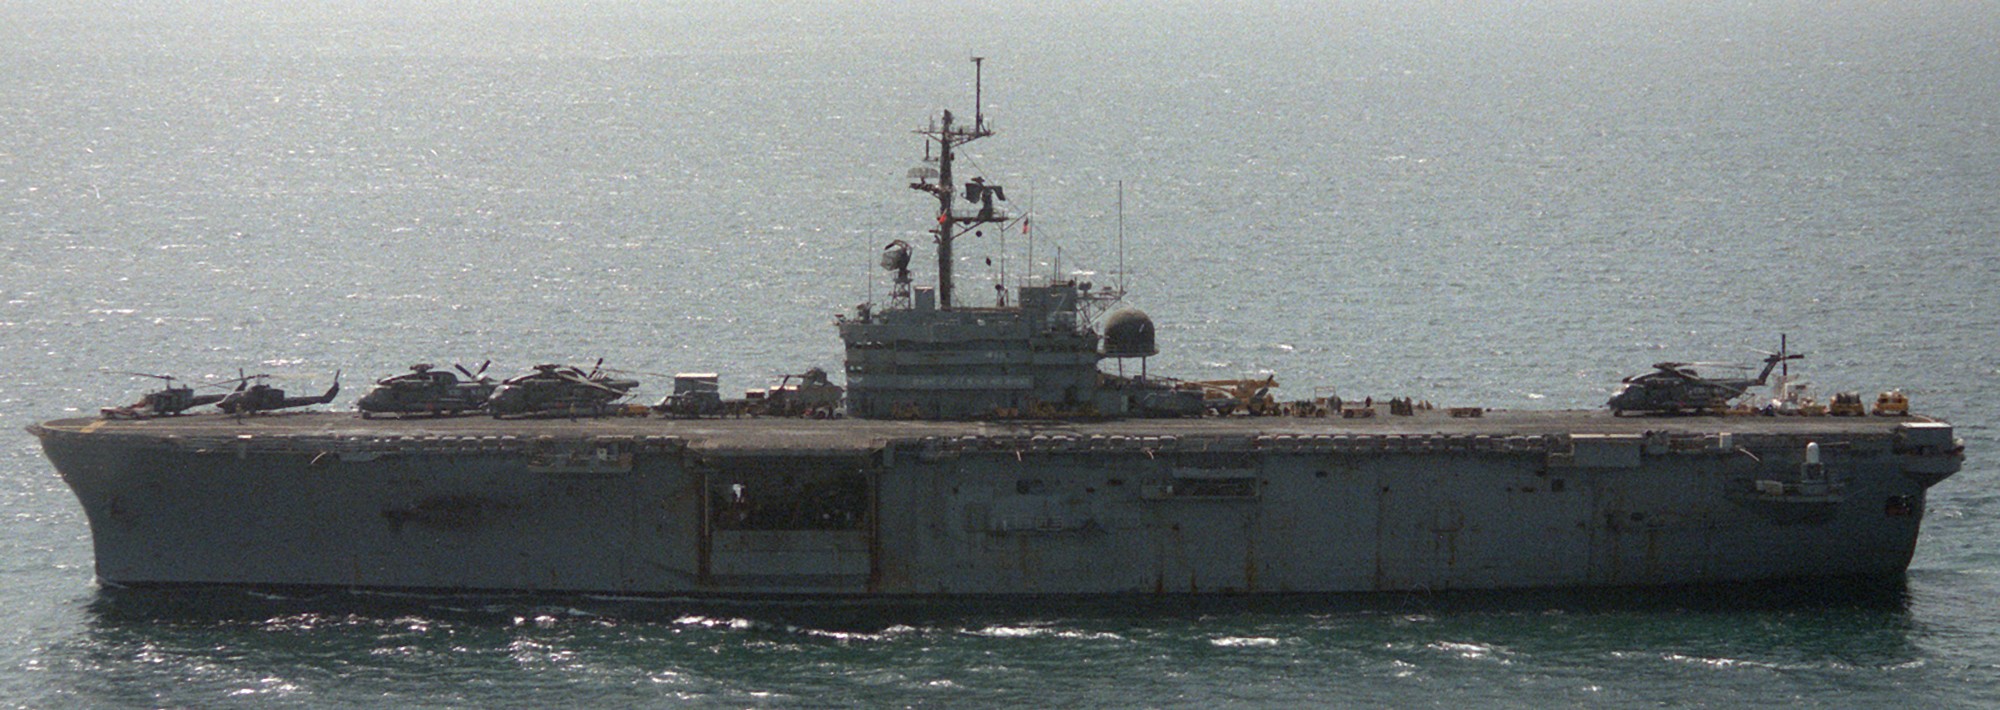 lph-7 uss guadalcanal iwo jima class amphibious assault ship landing platform helicopter us navy 50 gulf of oman